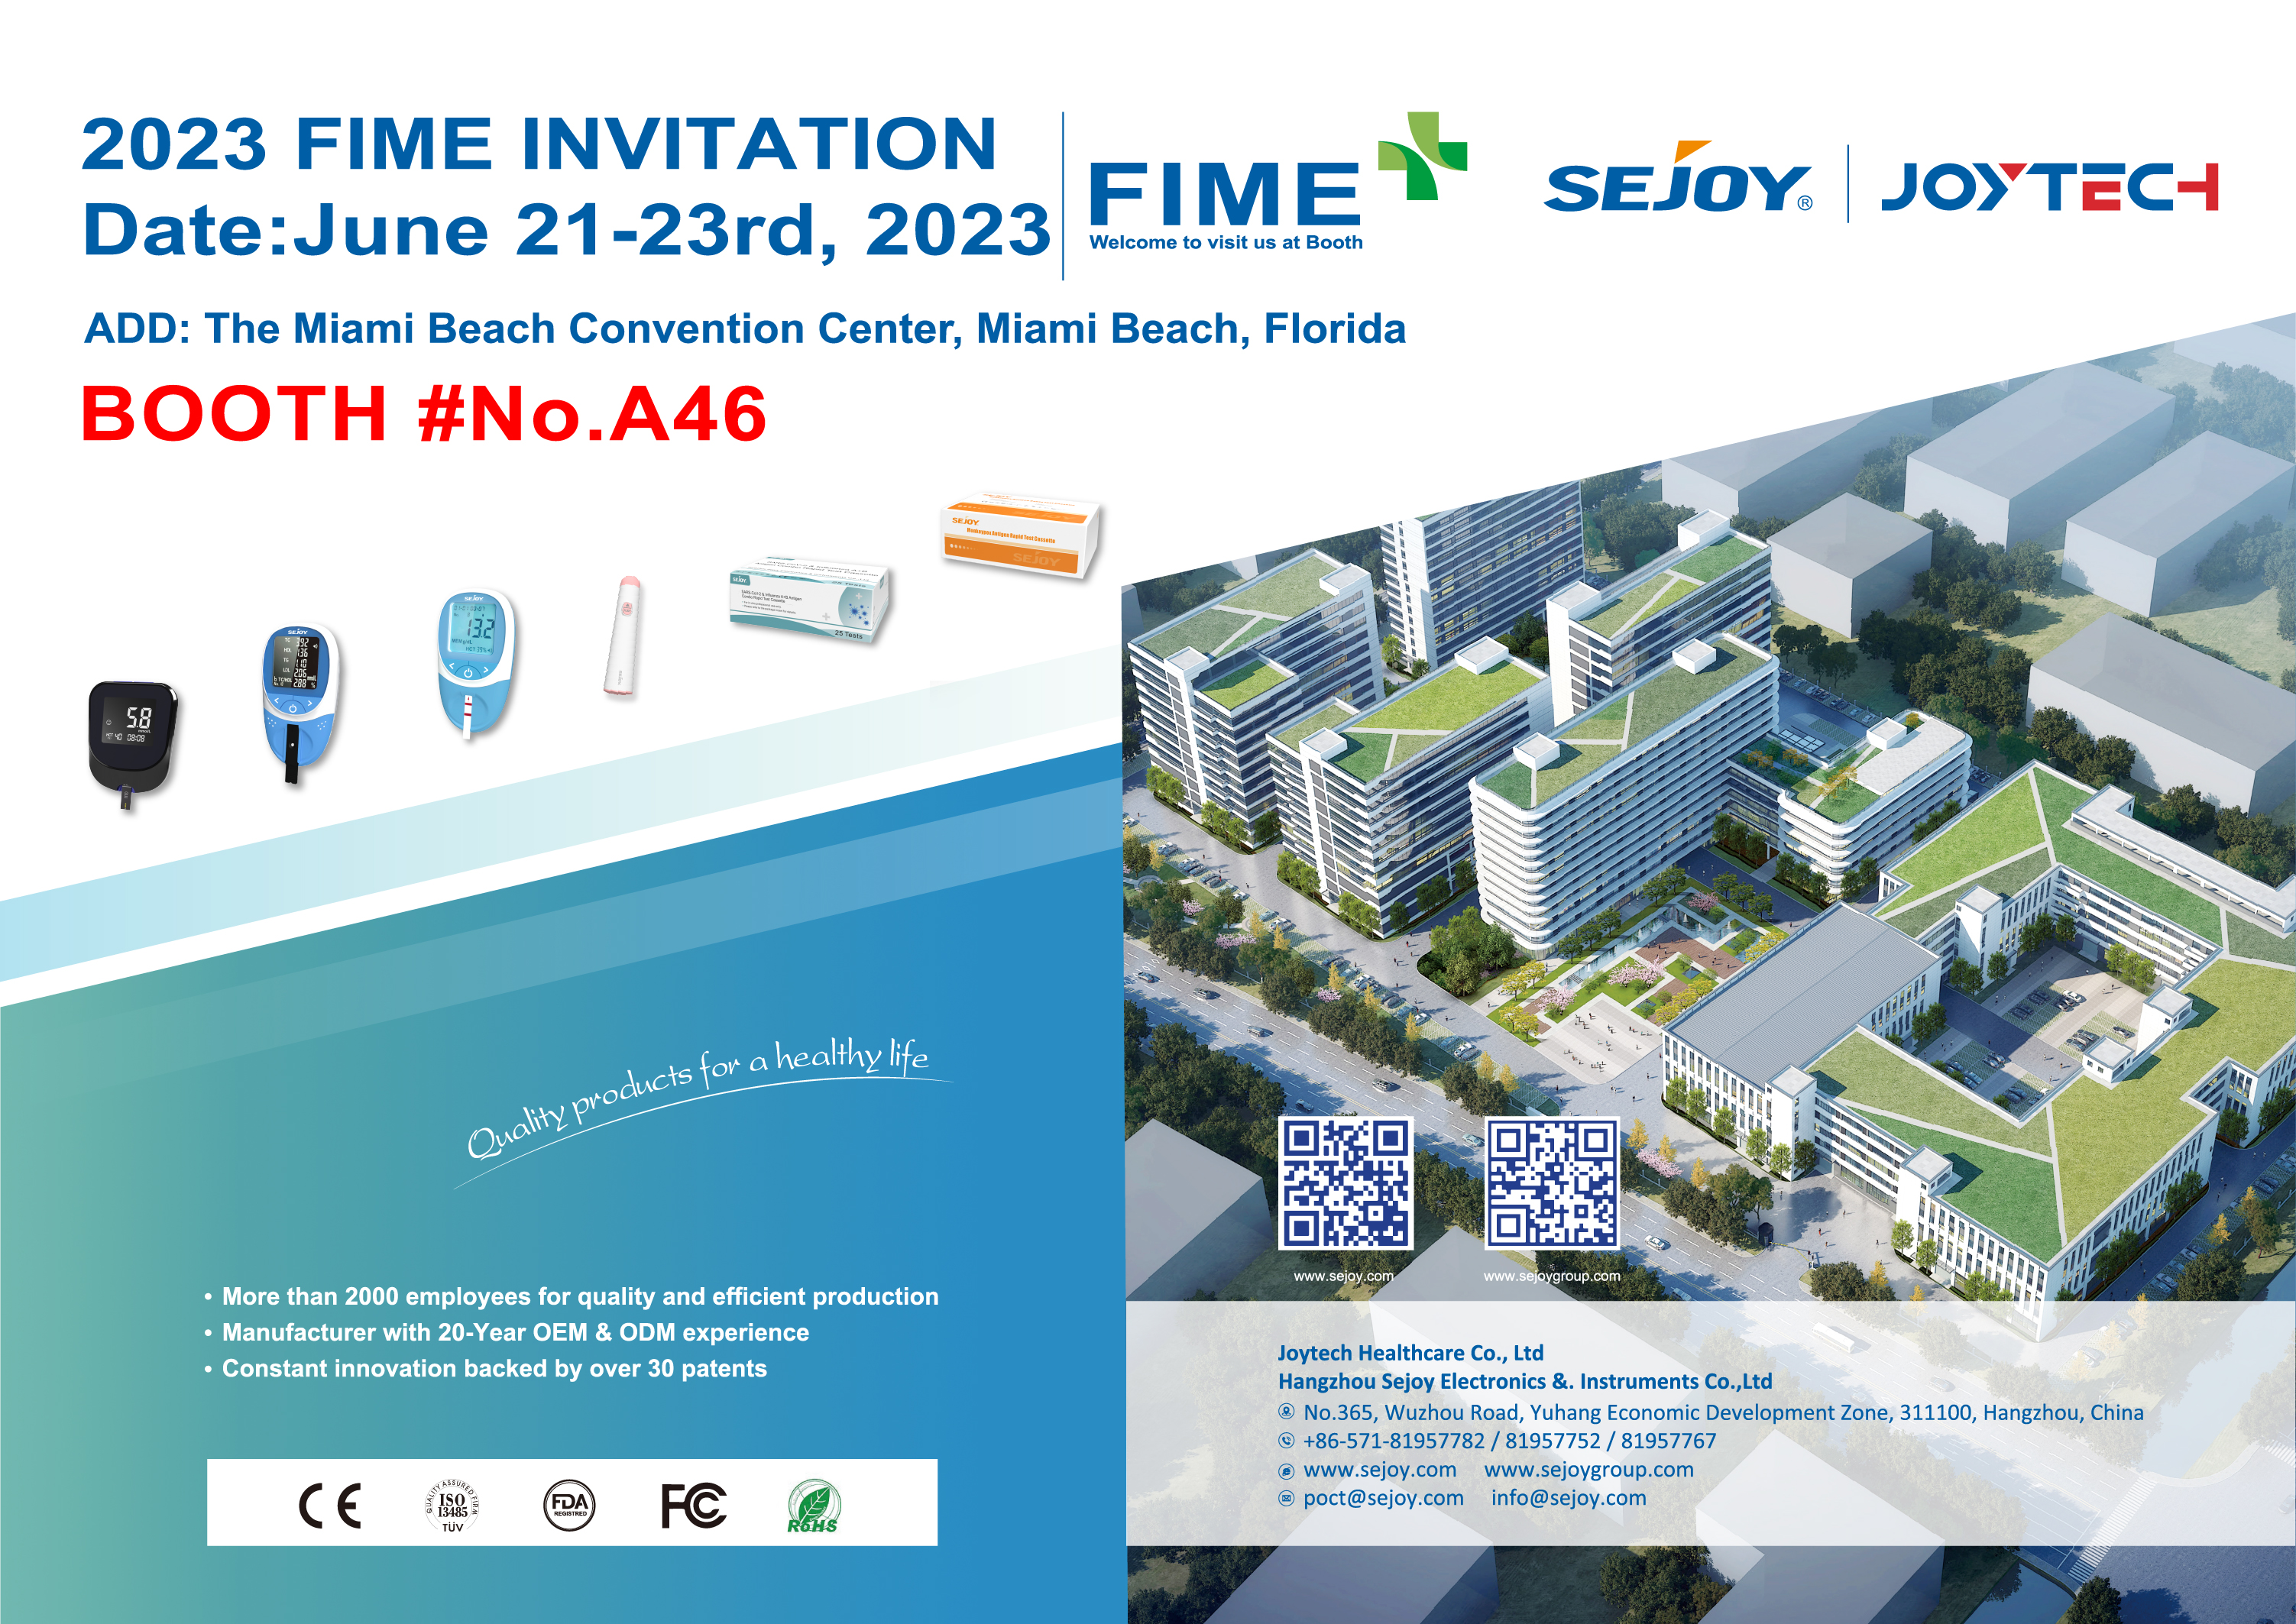 Tentoonstellingsuitnodiging -2023 FIME blij je te ontmoeten in Miami!